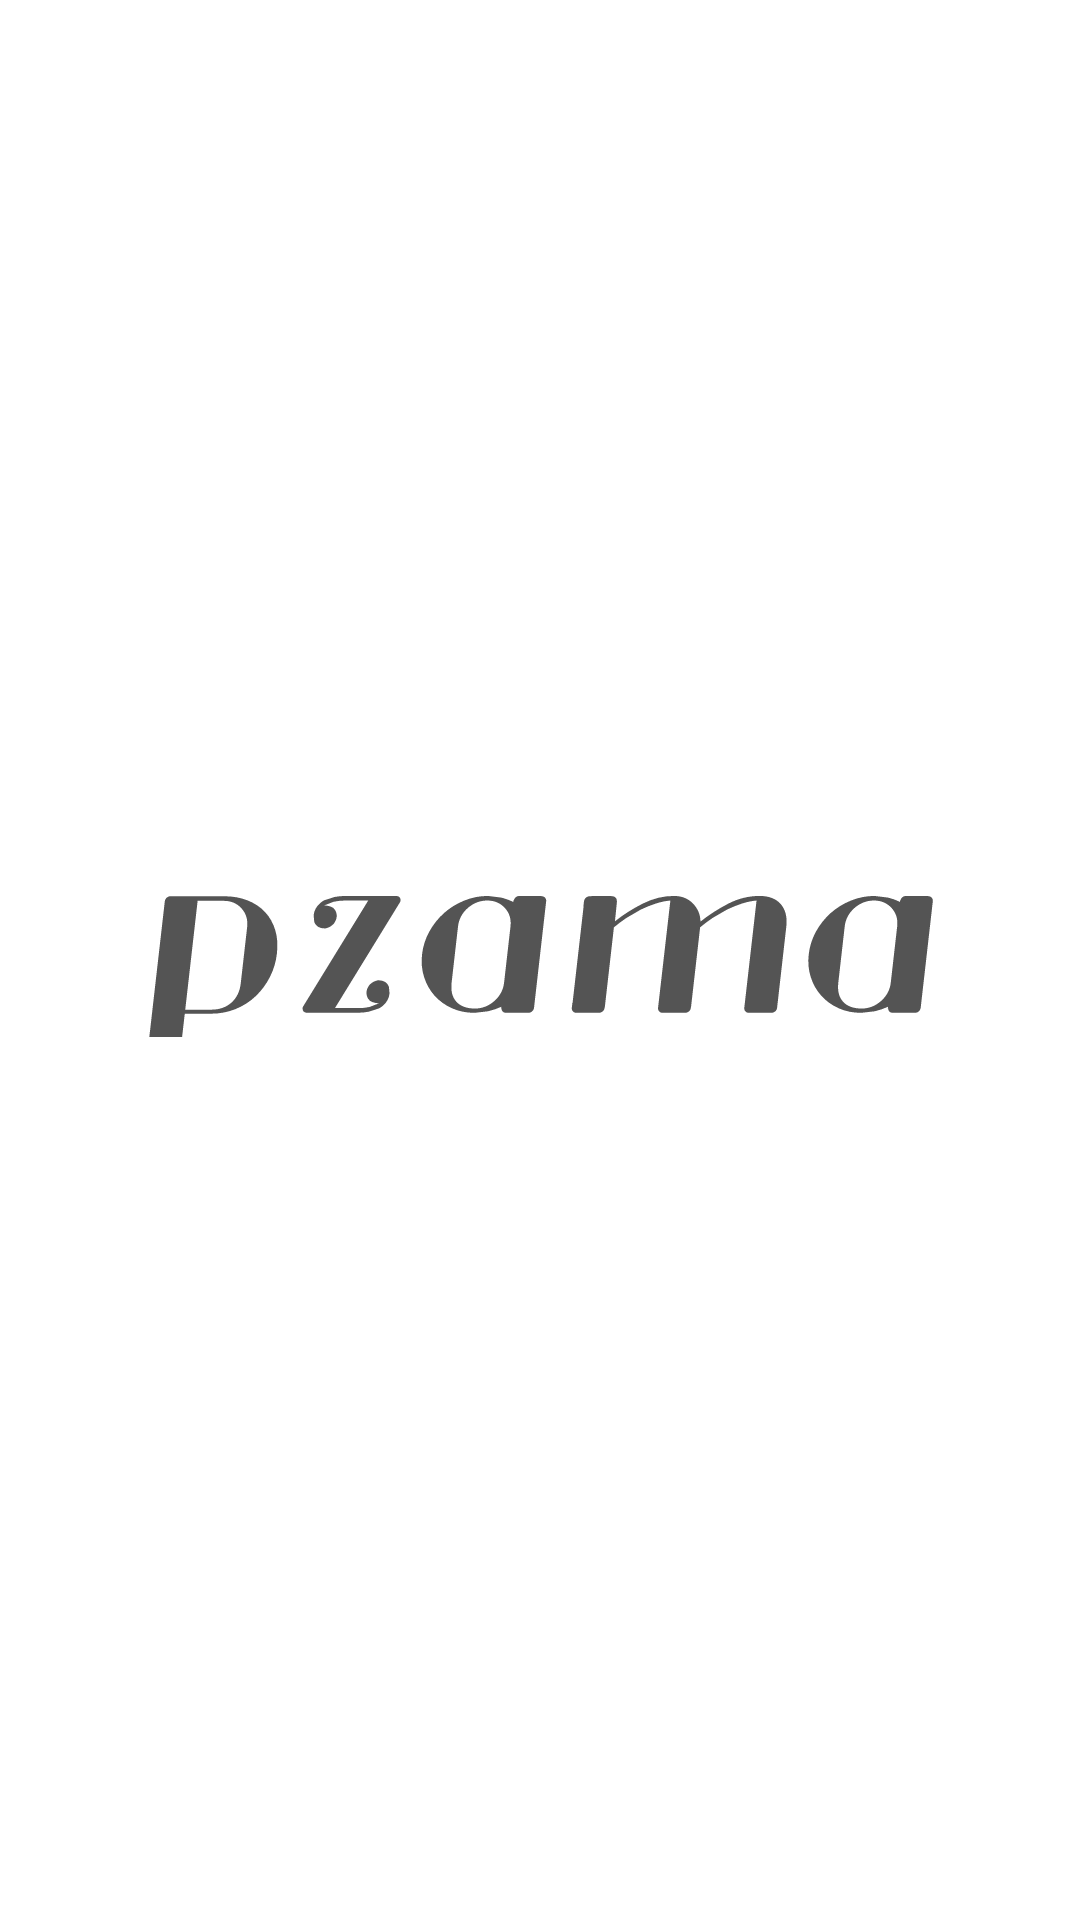 Logo da empresa PZAMA CONFECÇÕES LTDA, vaga COSTUREIRA DE AMOSTRA Blumenau